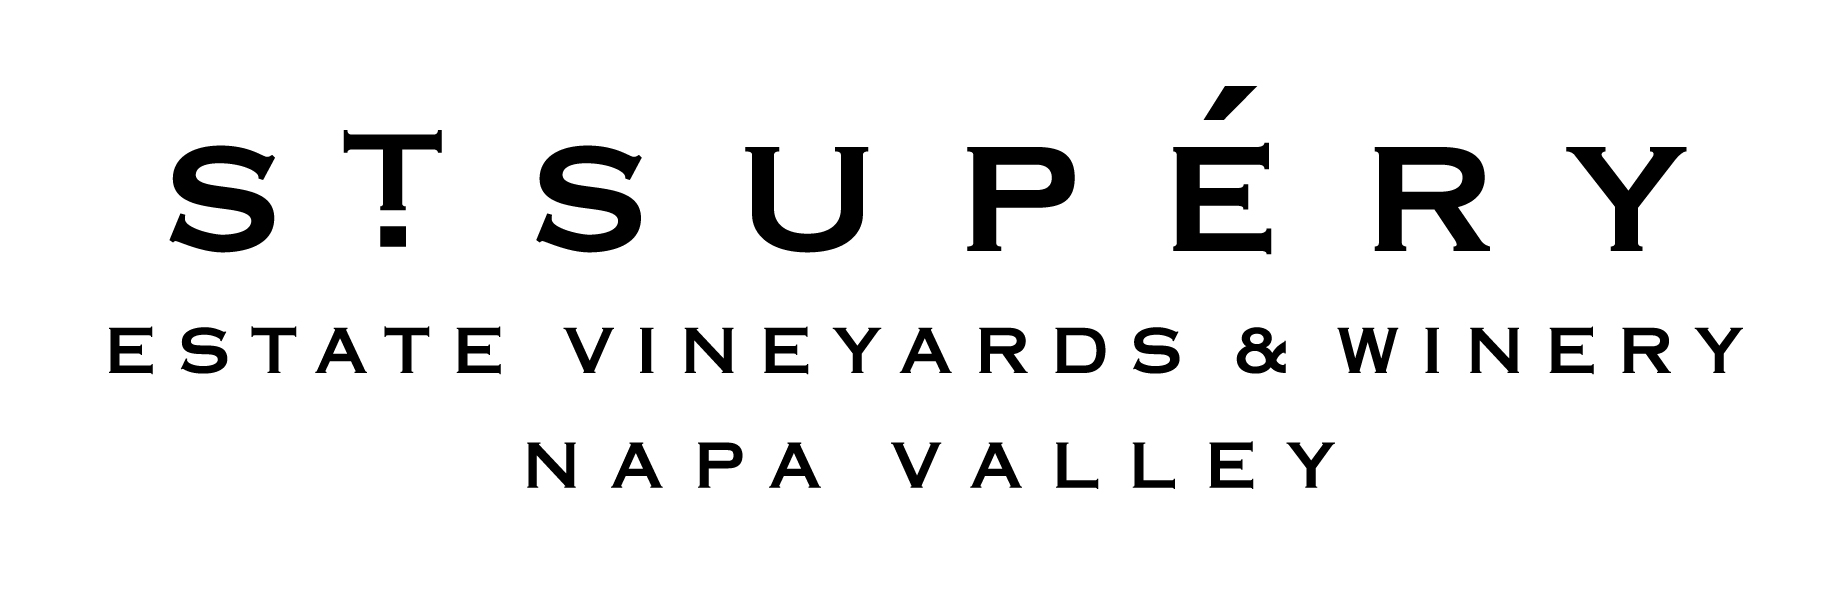 St. Supery Estate Vineyards & Winery